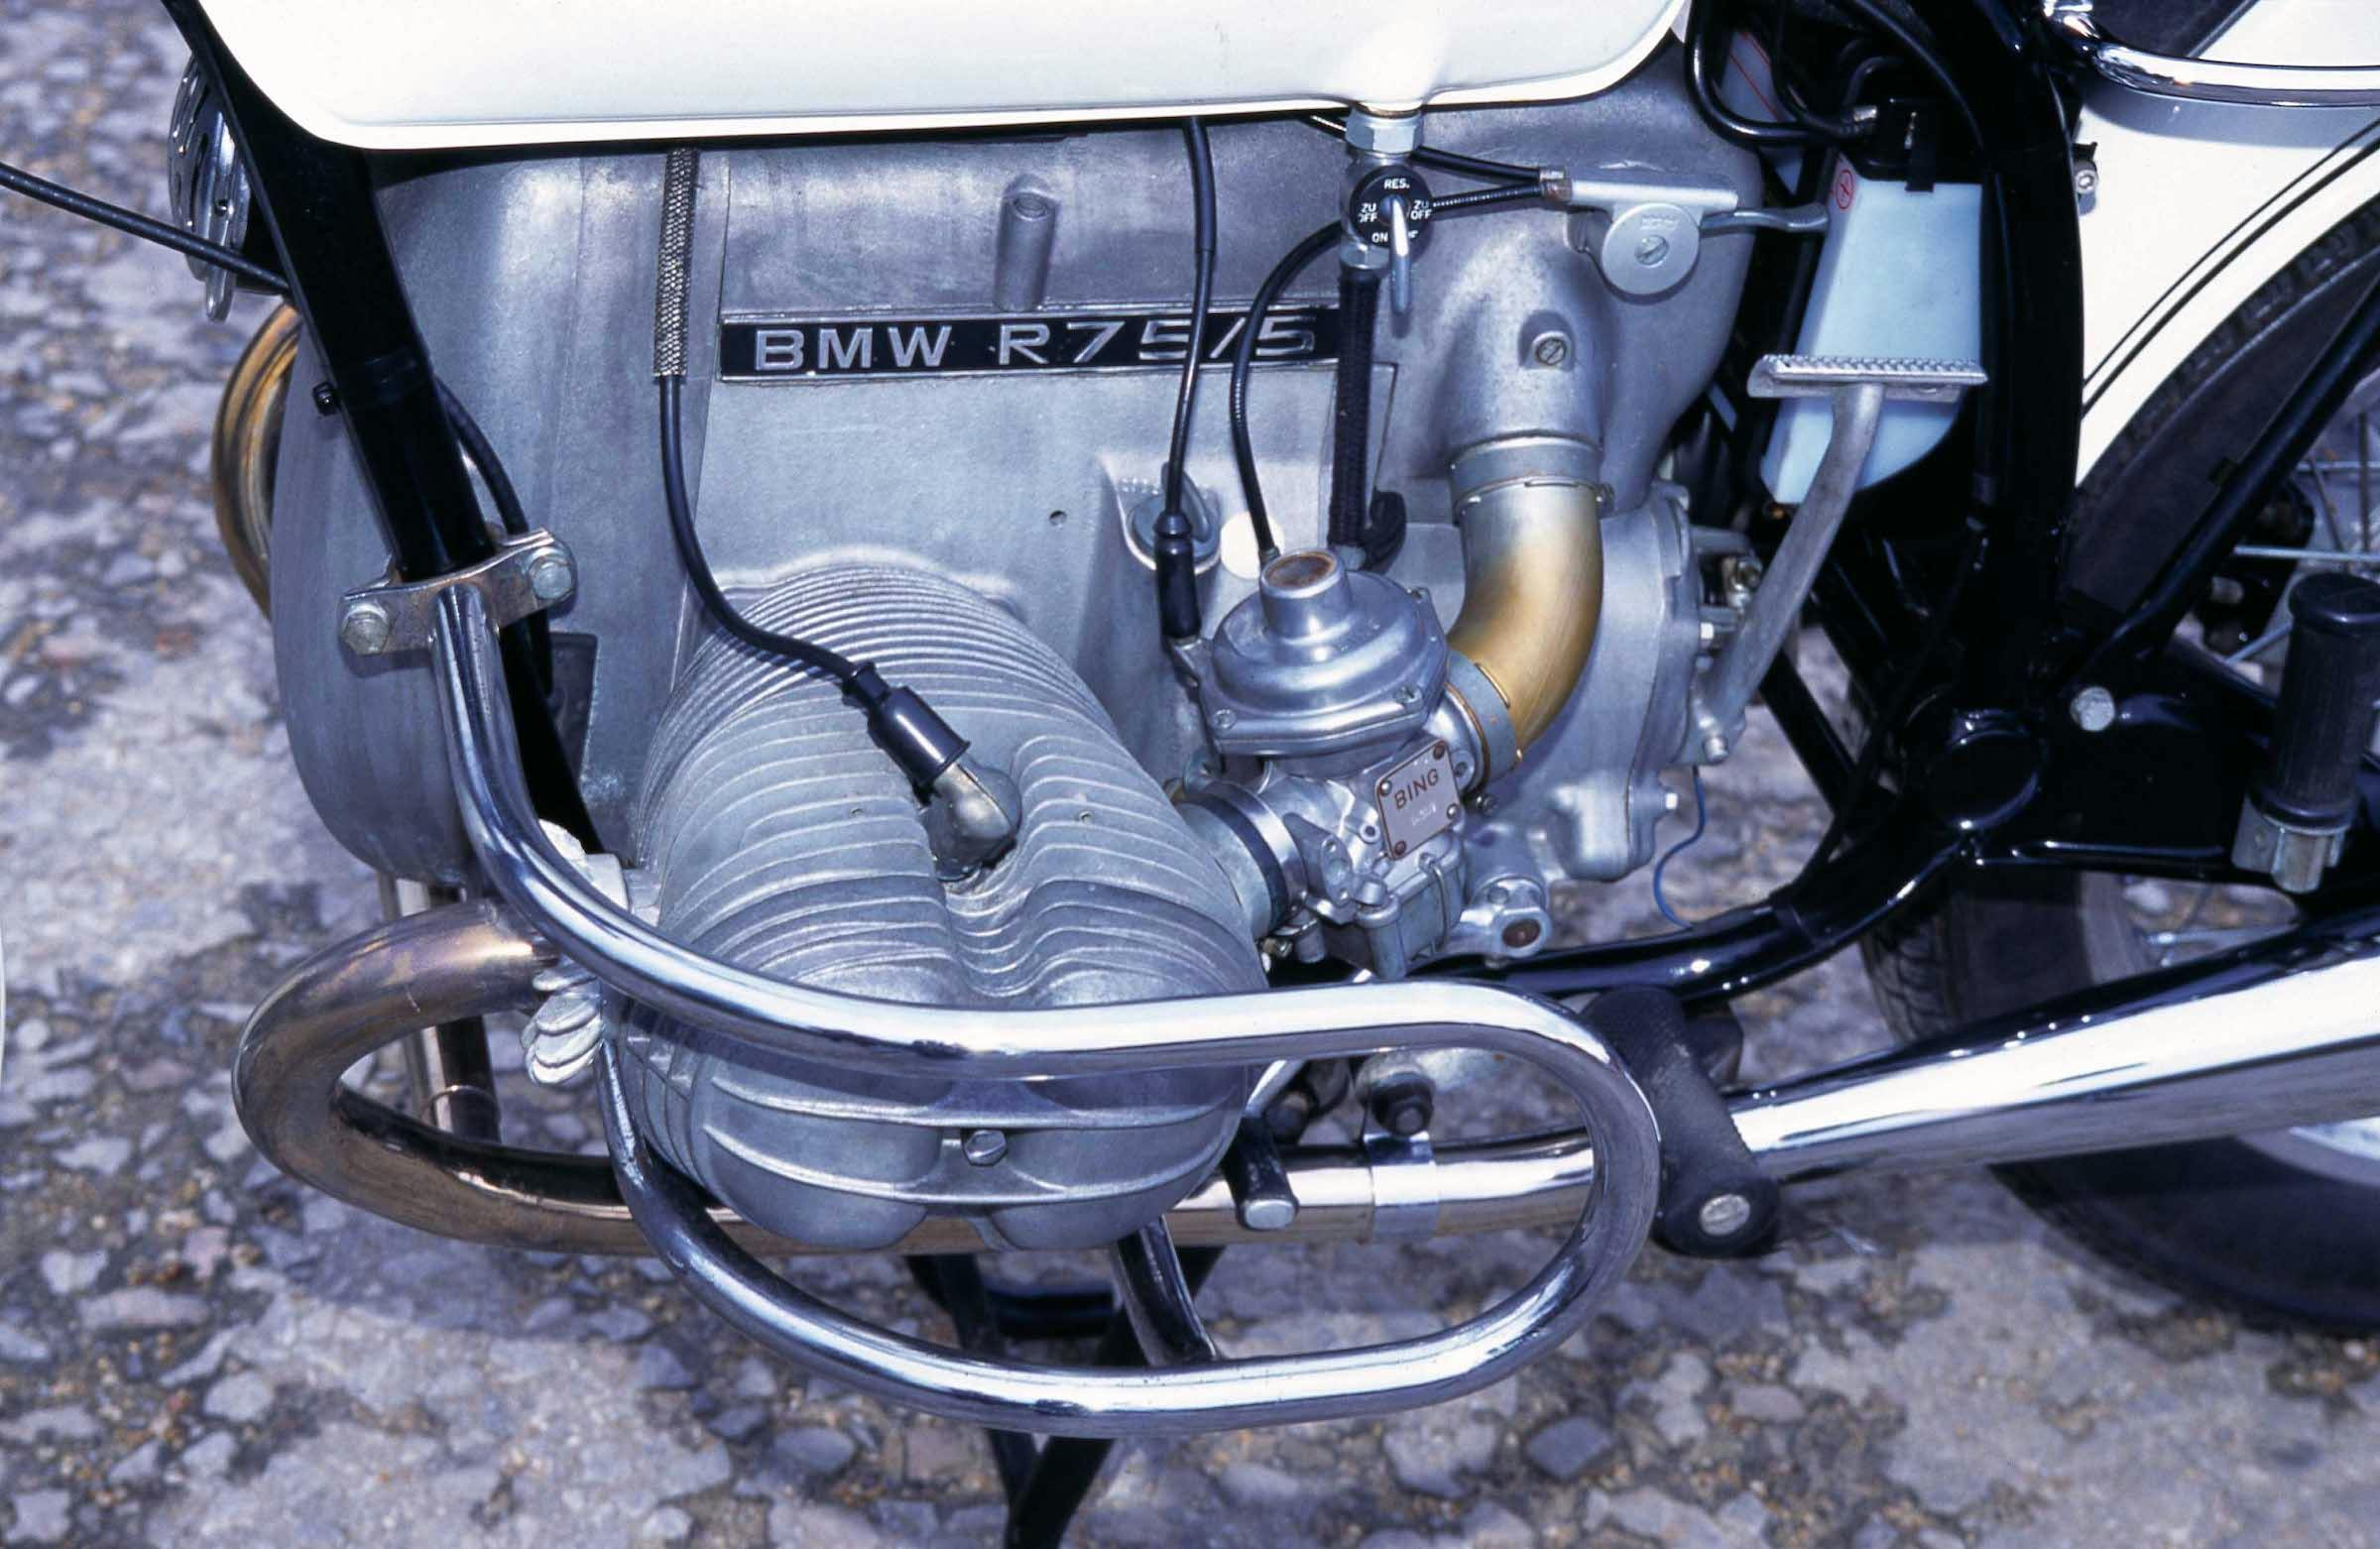 1972 BMW R75 toaster tank